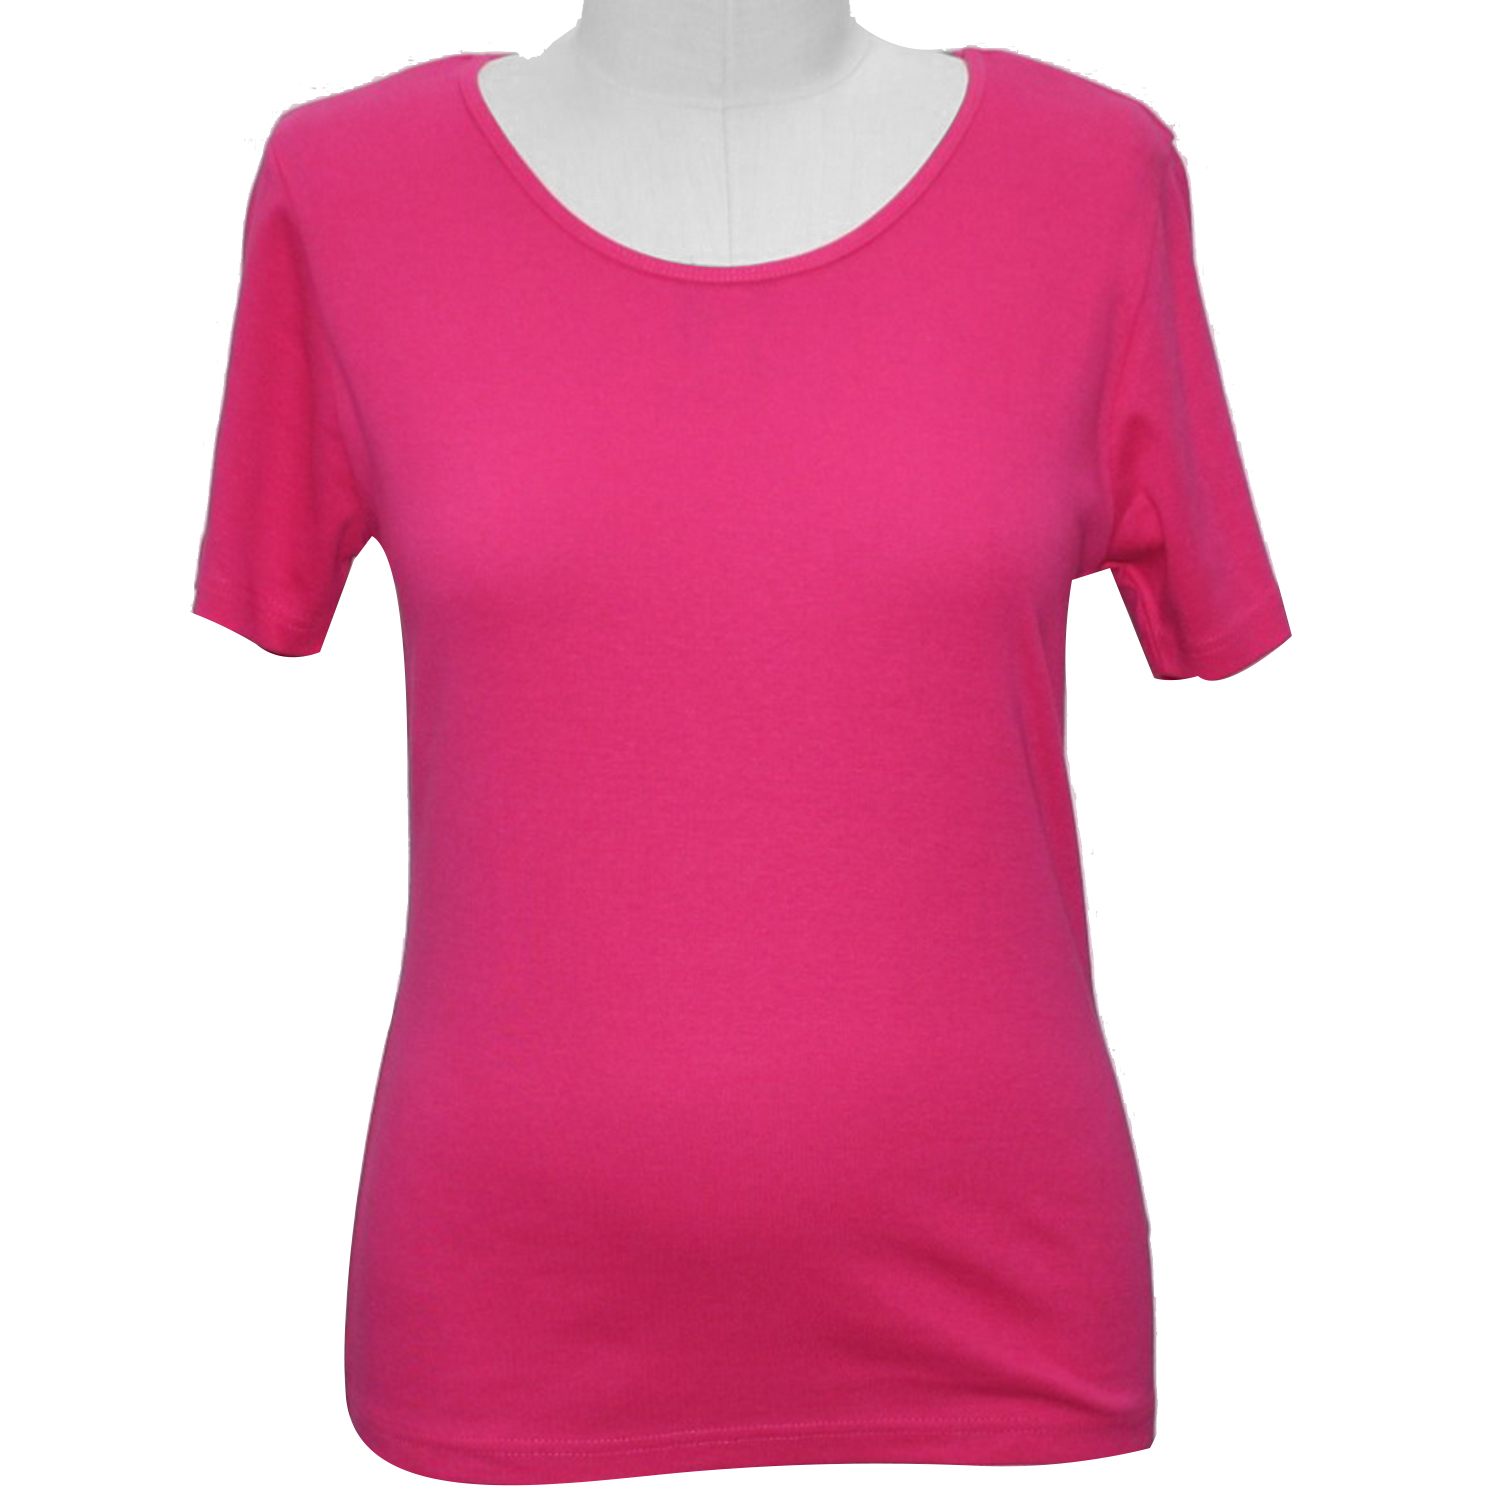 SUGARCRISP 100% Cotton Short Sleeve Rib TShirt (Size 10) - Pink